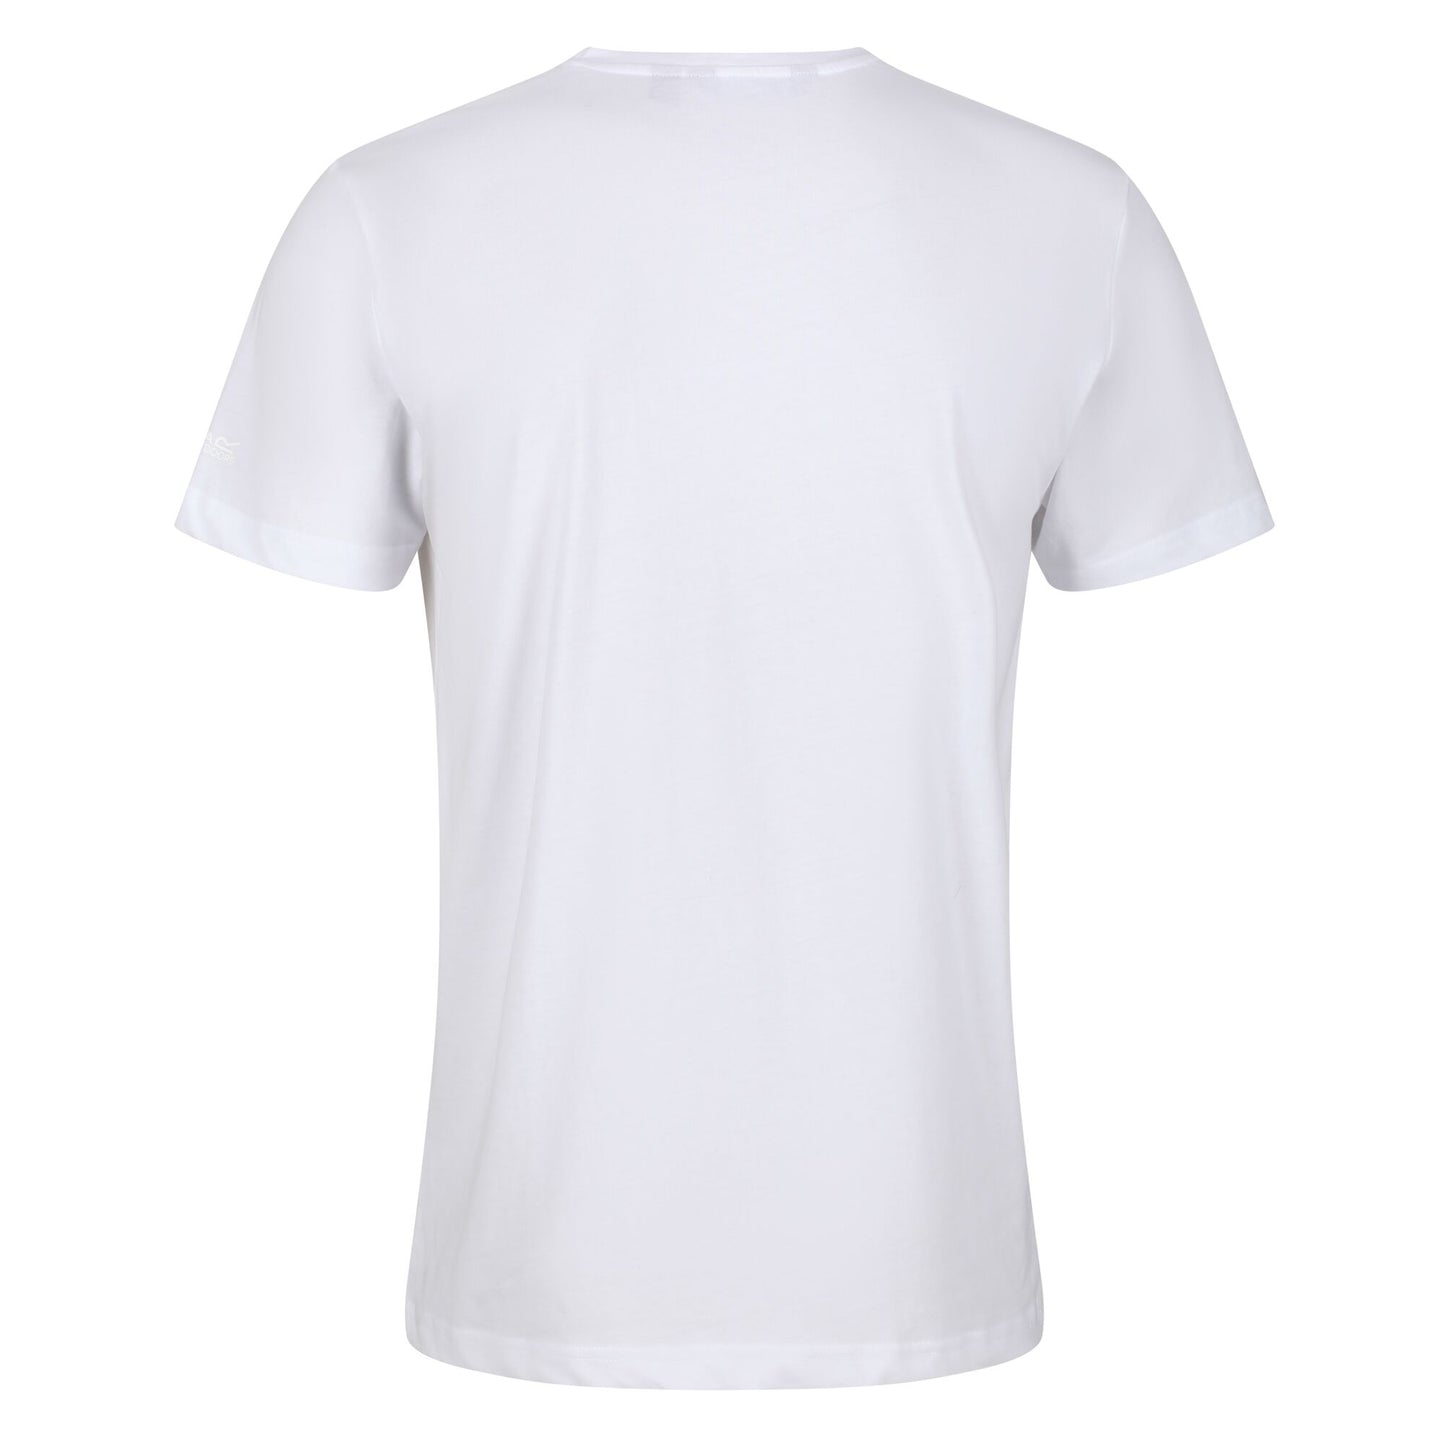 Regatta RMT254 900 Breezed II White T-Shirt